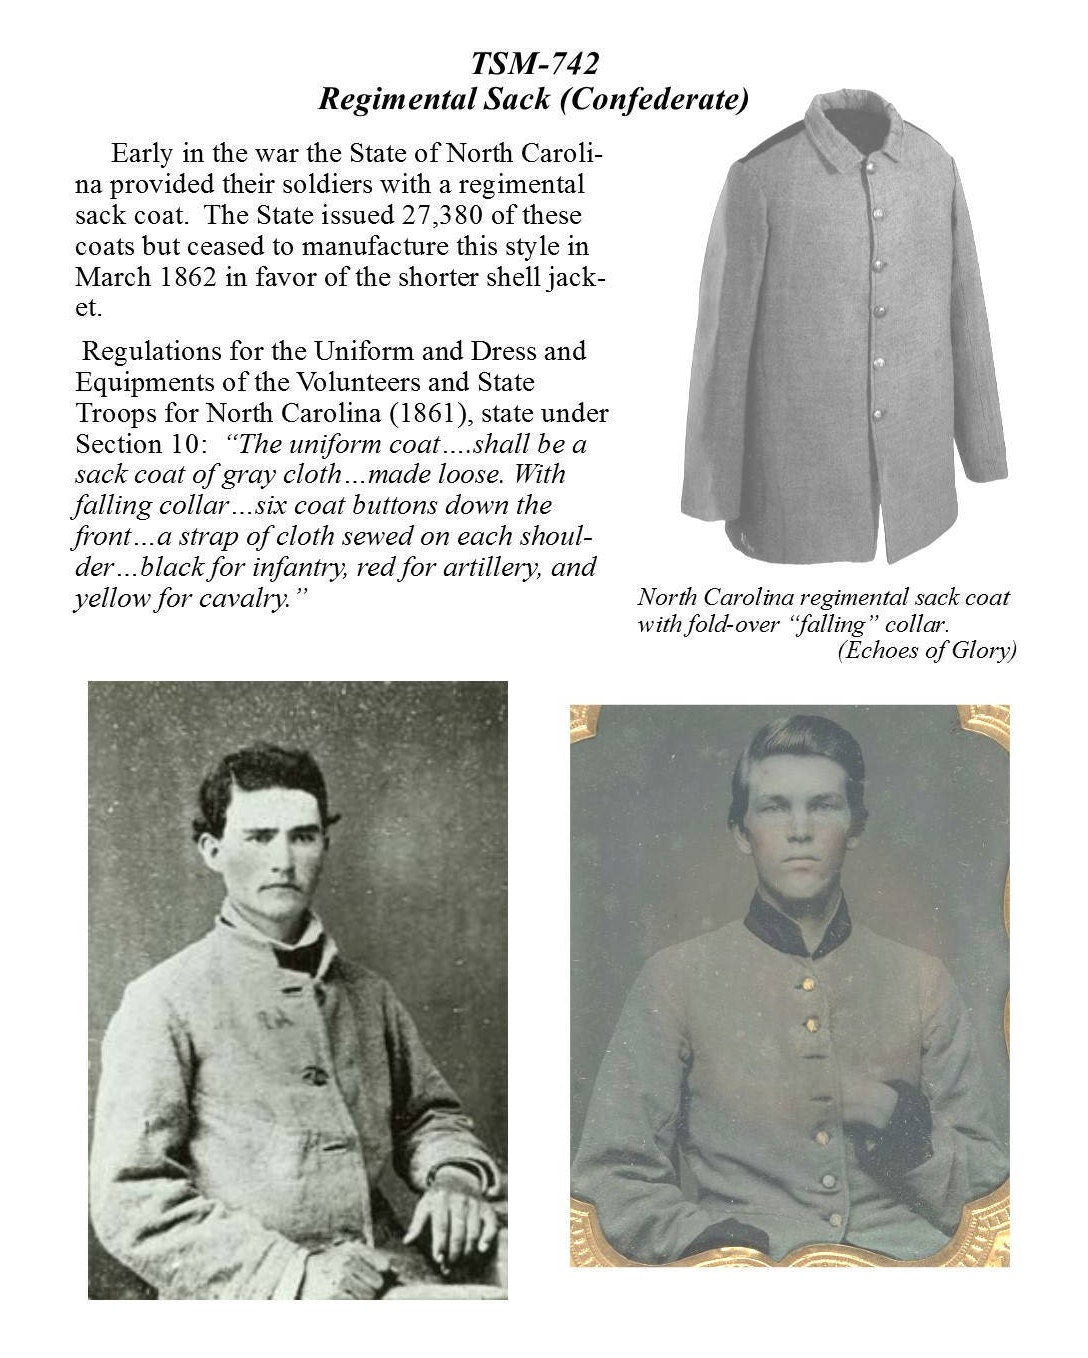 Regimental (Confederate) Sack/ Civil War Era Regimental Sack Coat/ Timeless Stitches TSM-742 Regimental Sack Coat